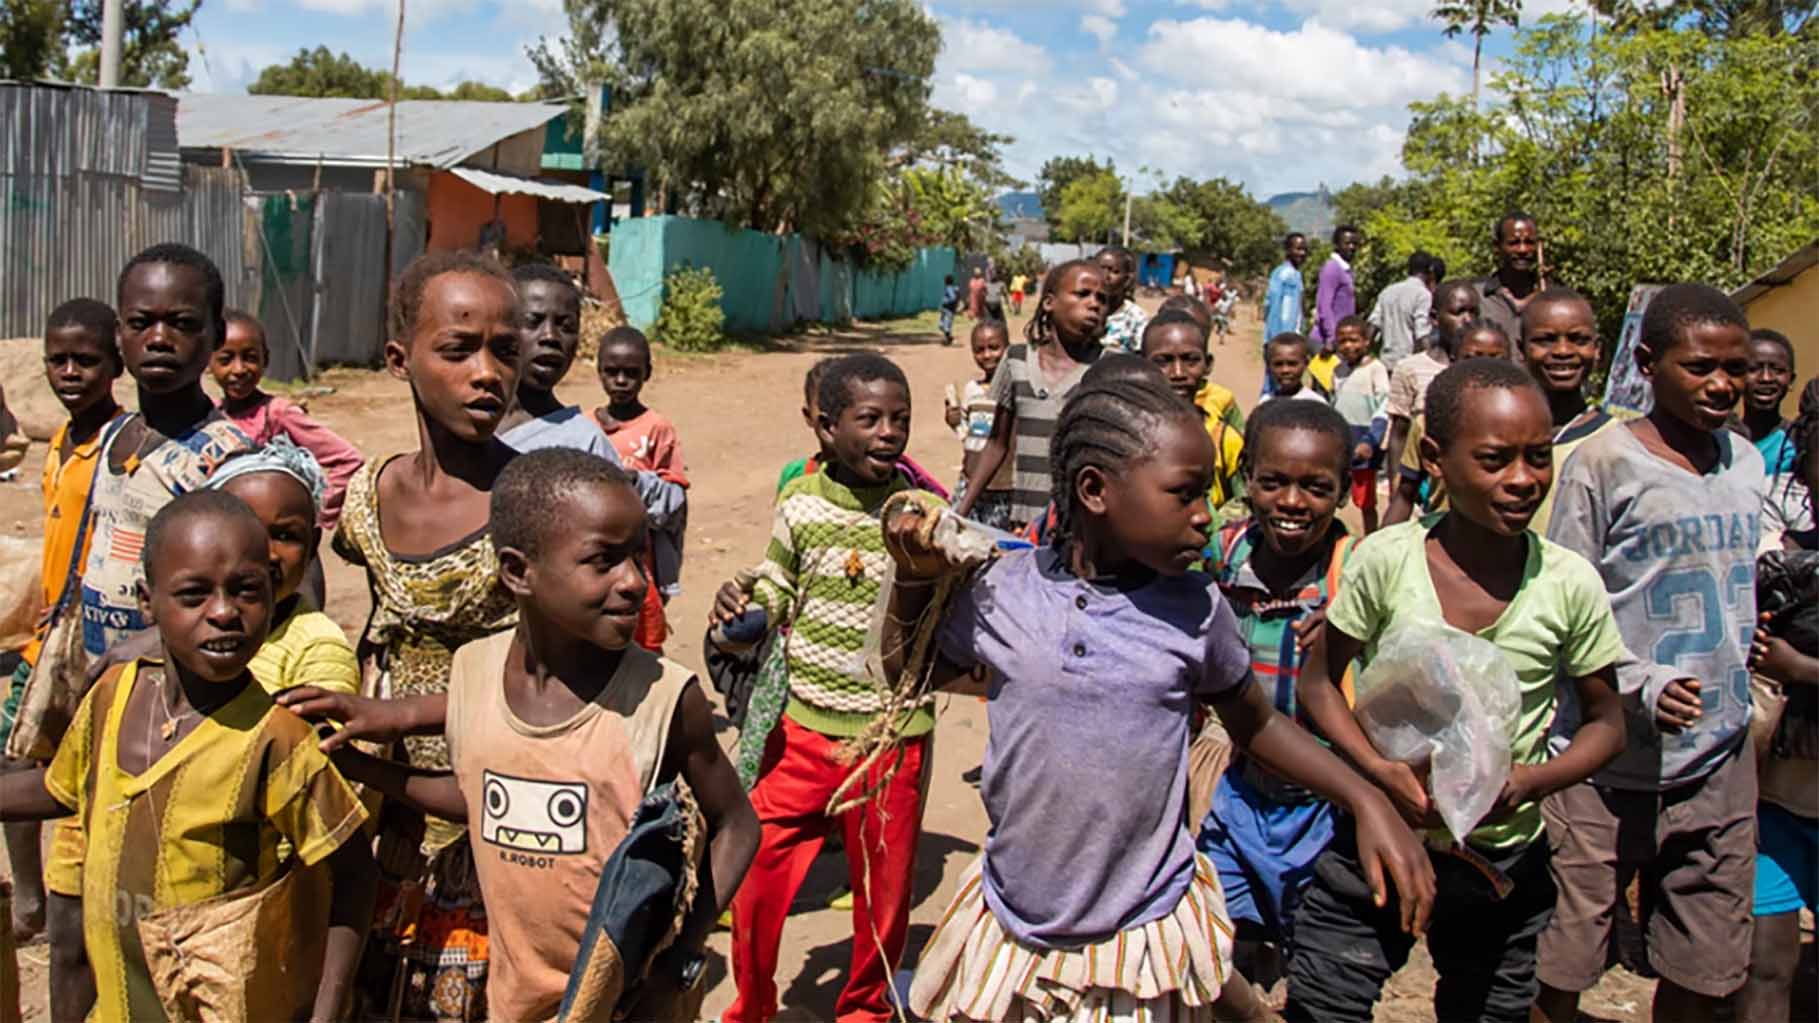 Children leaving school in Ale, Ethiopia. Taylor Wilcox, Unsplash.